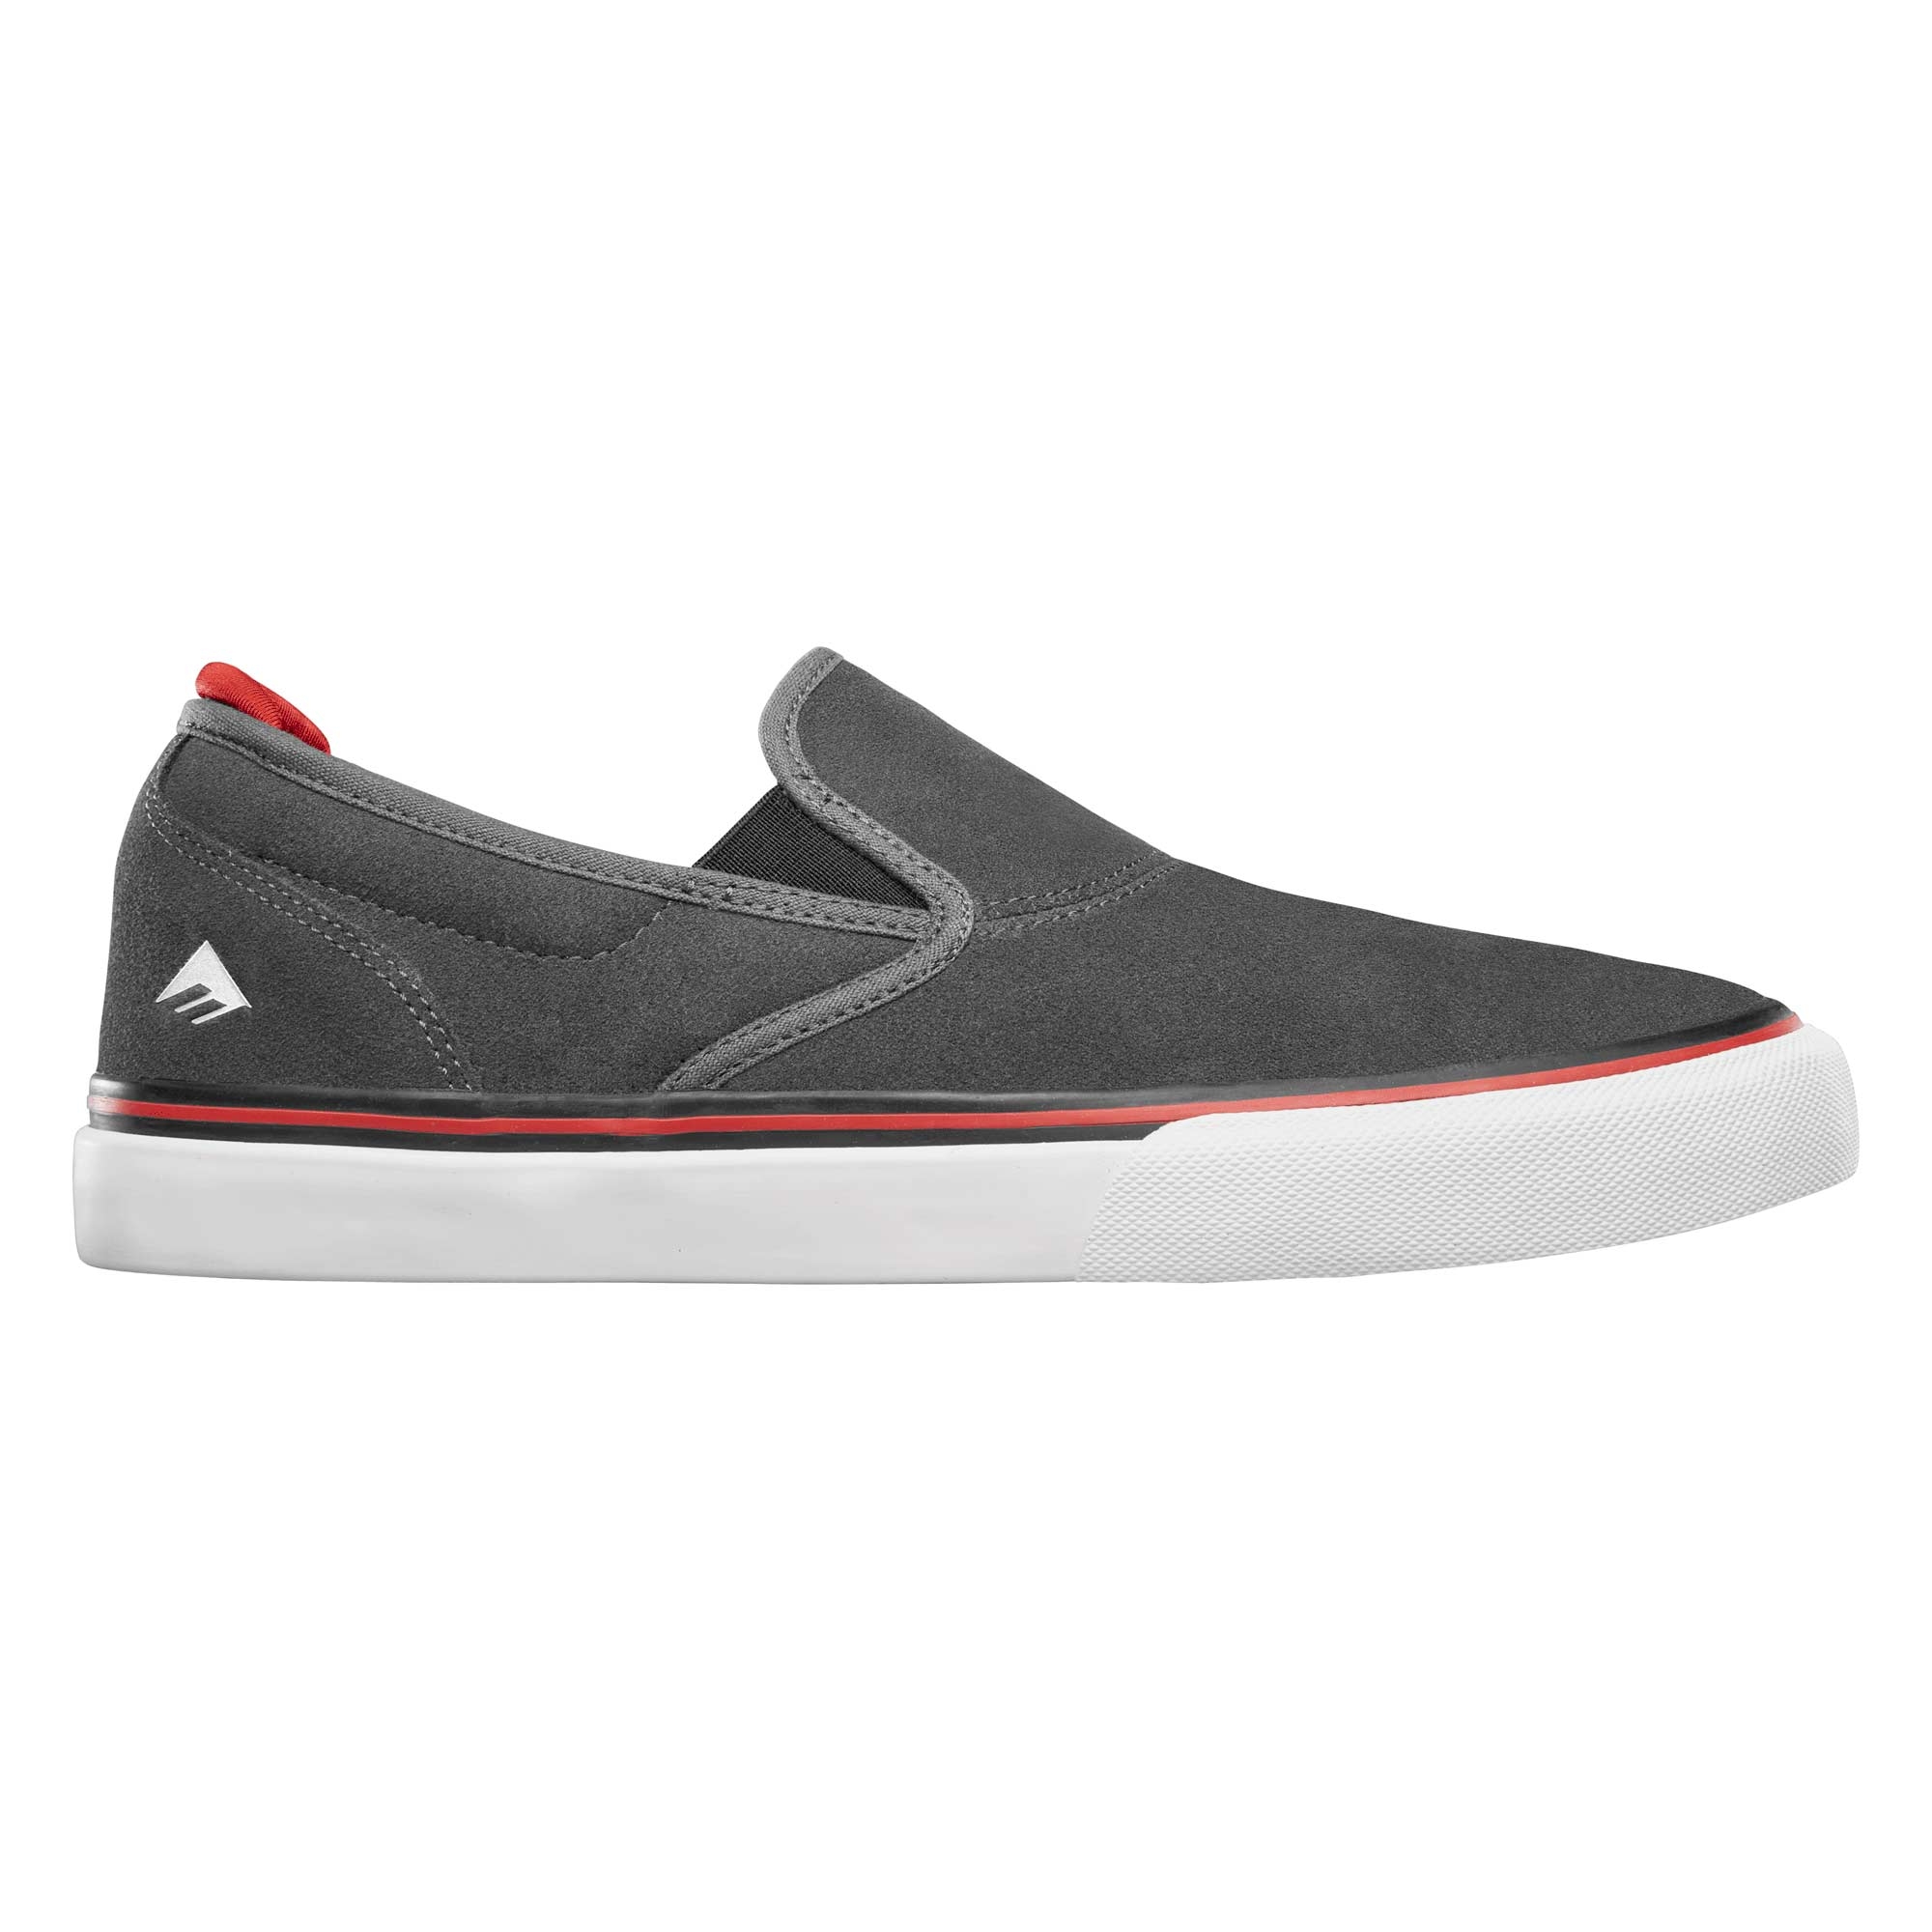 EMERICA Shoe WINO G6 SLIP-ON dar grey/bla/red dark grey/black/red